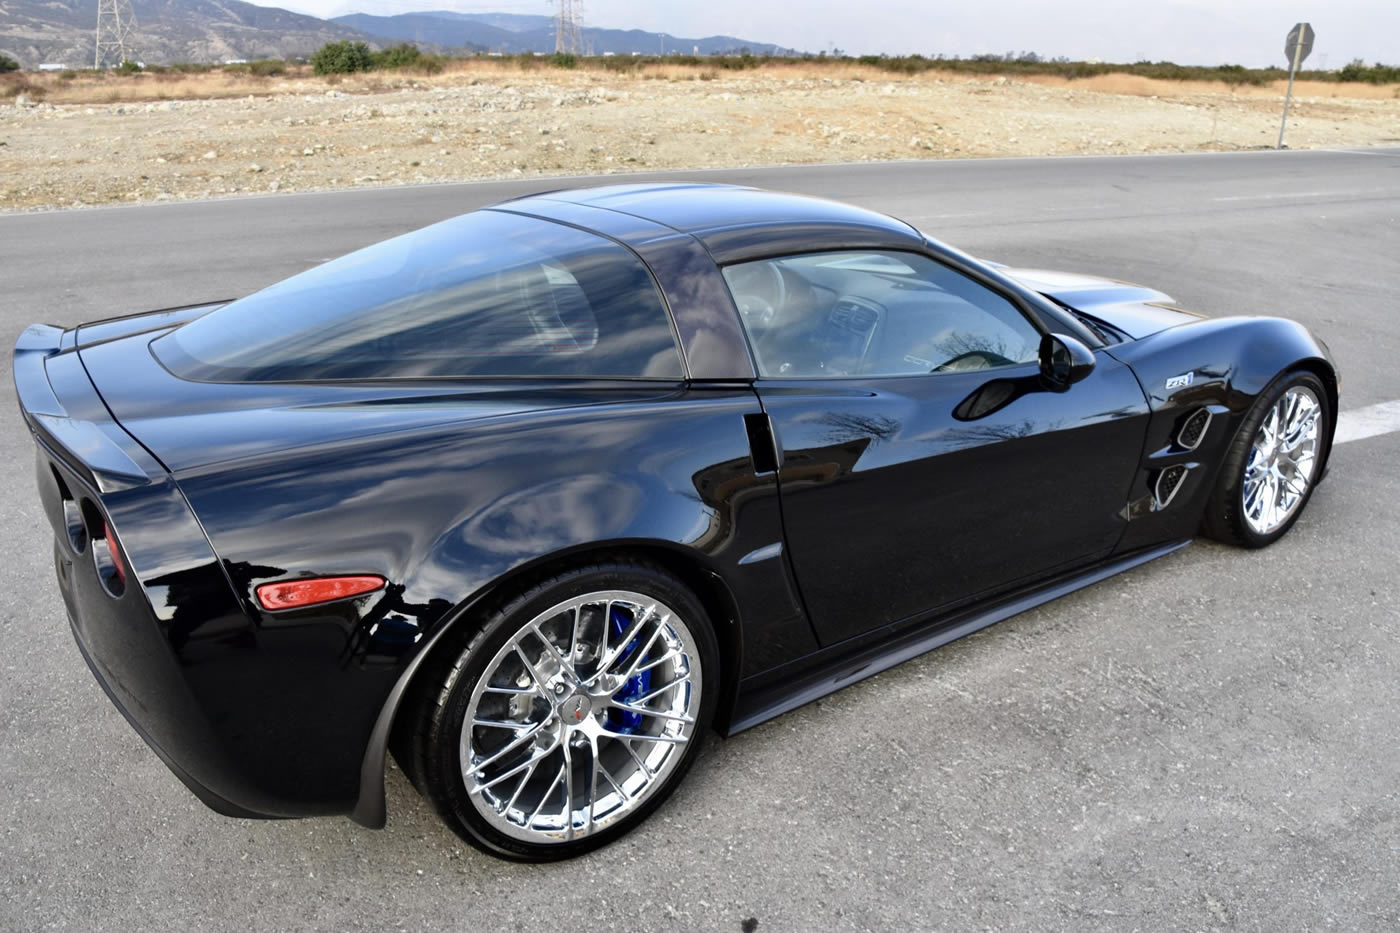 2010 Corvette ZR1 - Black on Black